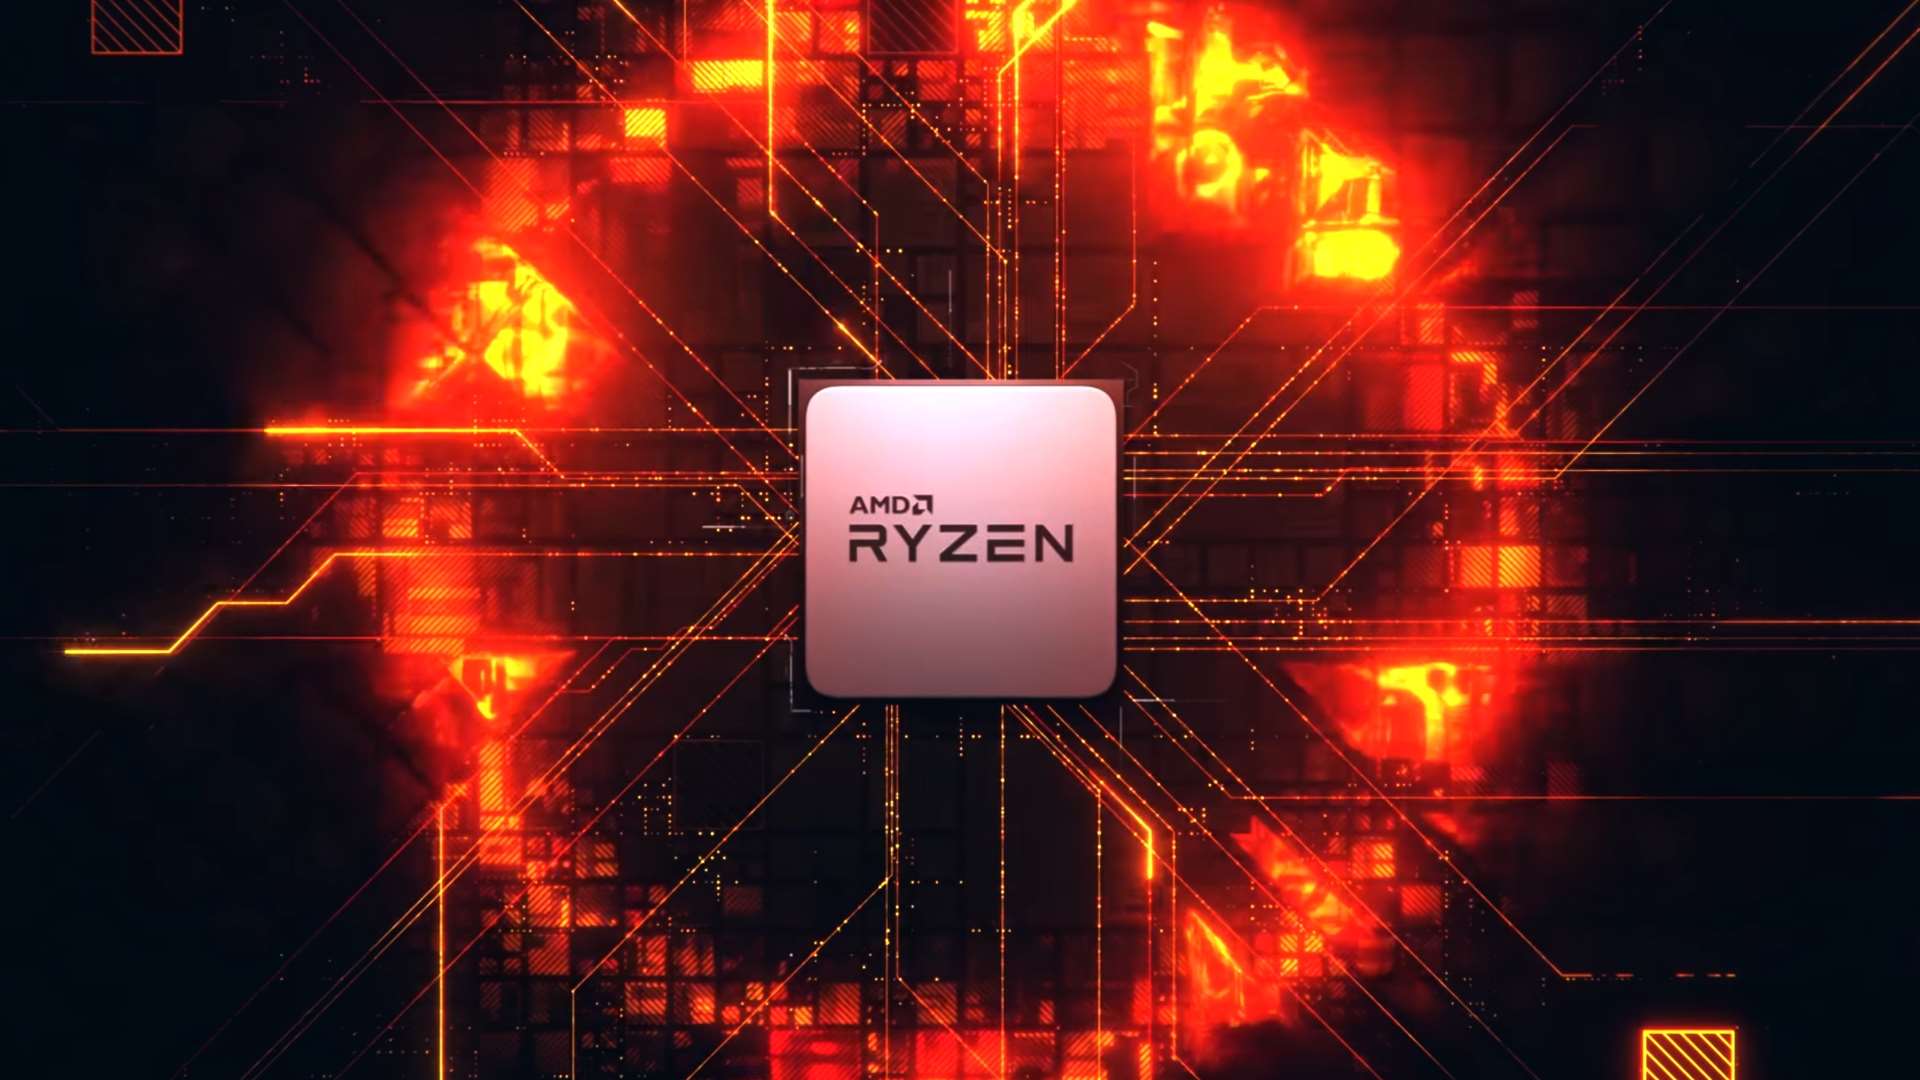 Intel Alder Lake hasn’t slowed the adoption rate of AMD Ryzen CPUs in gaming PCs